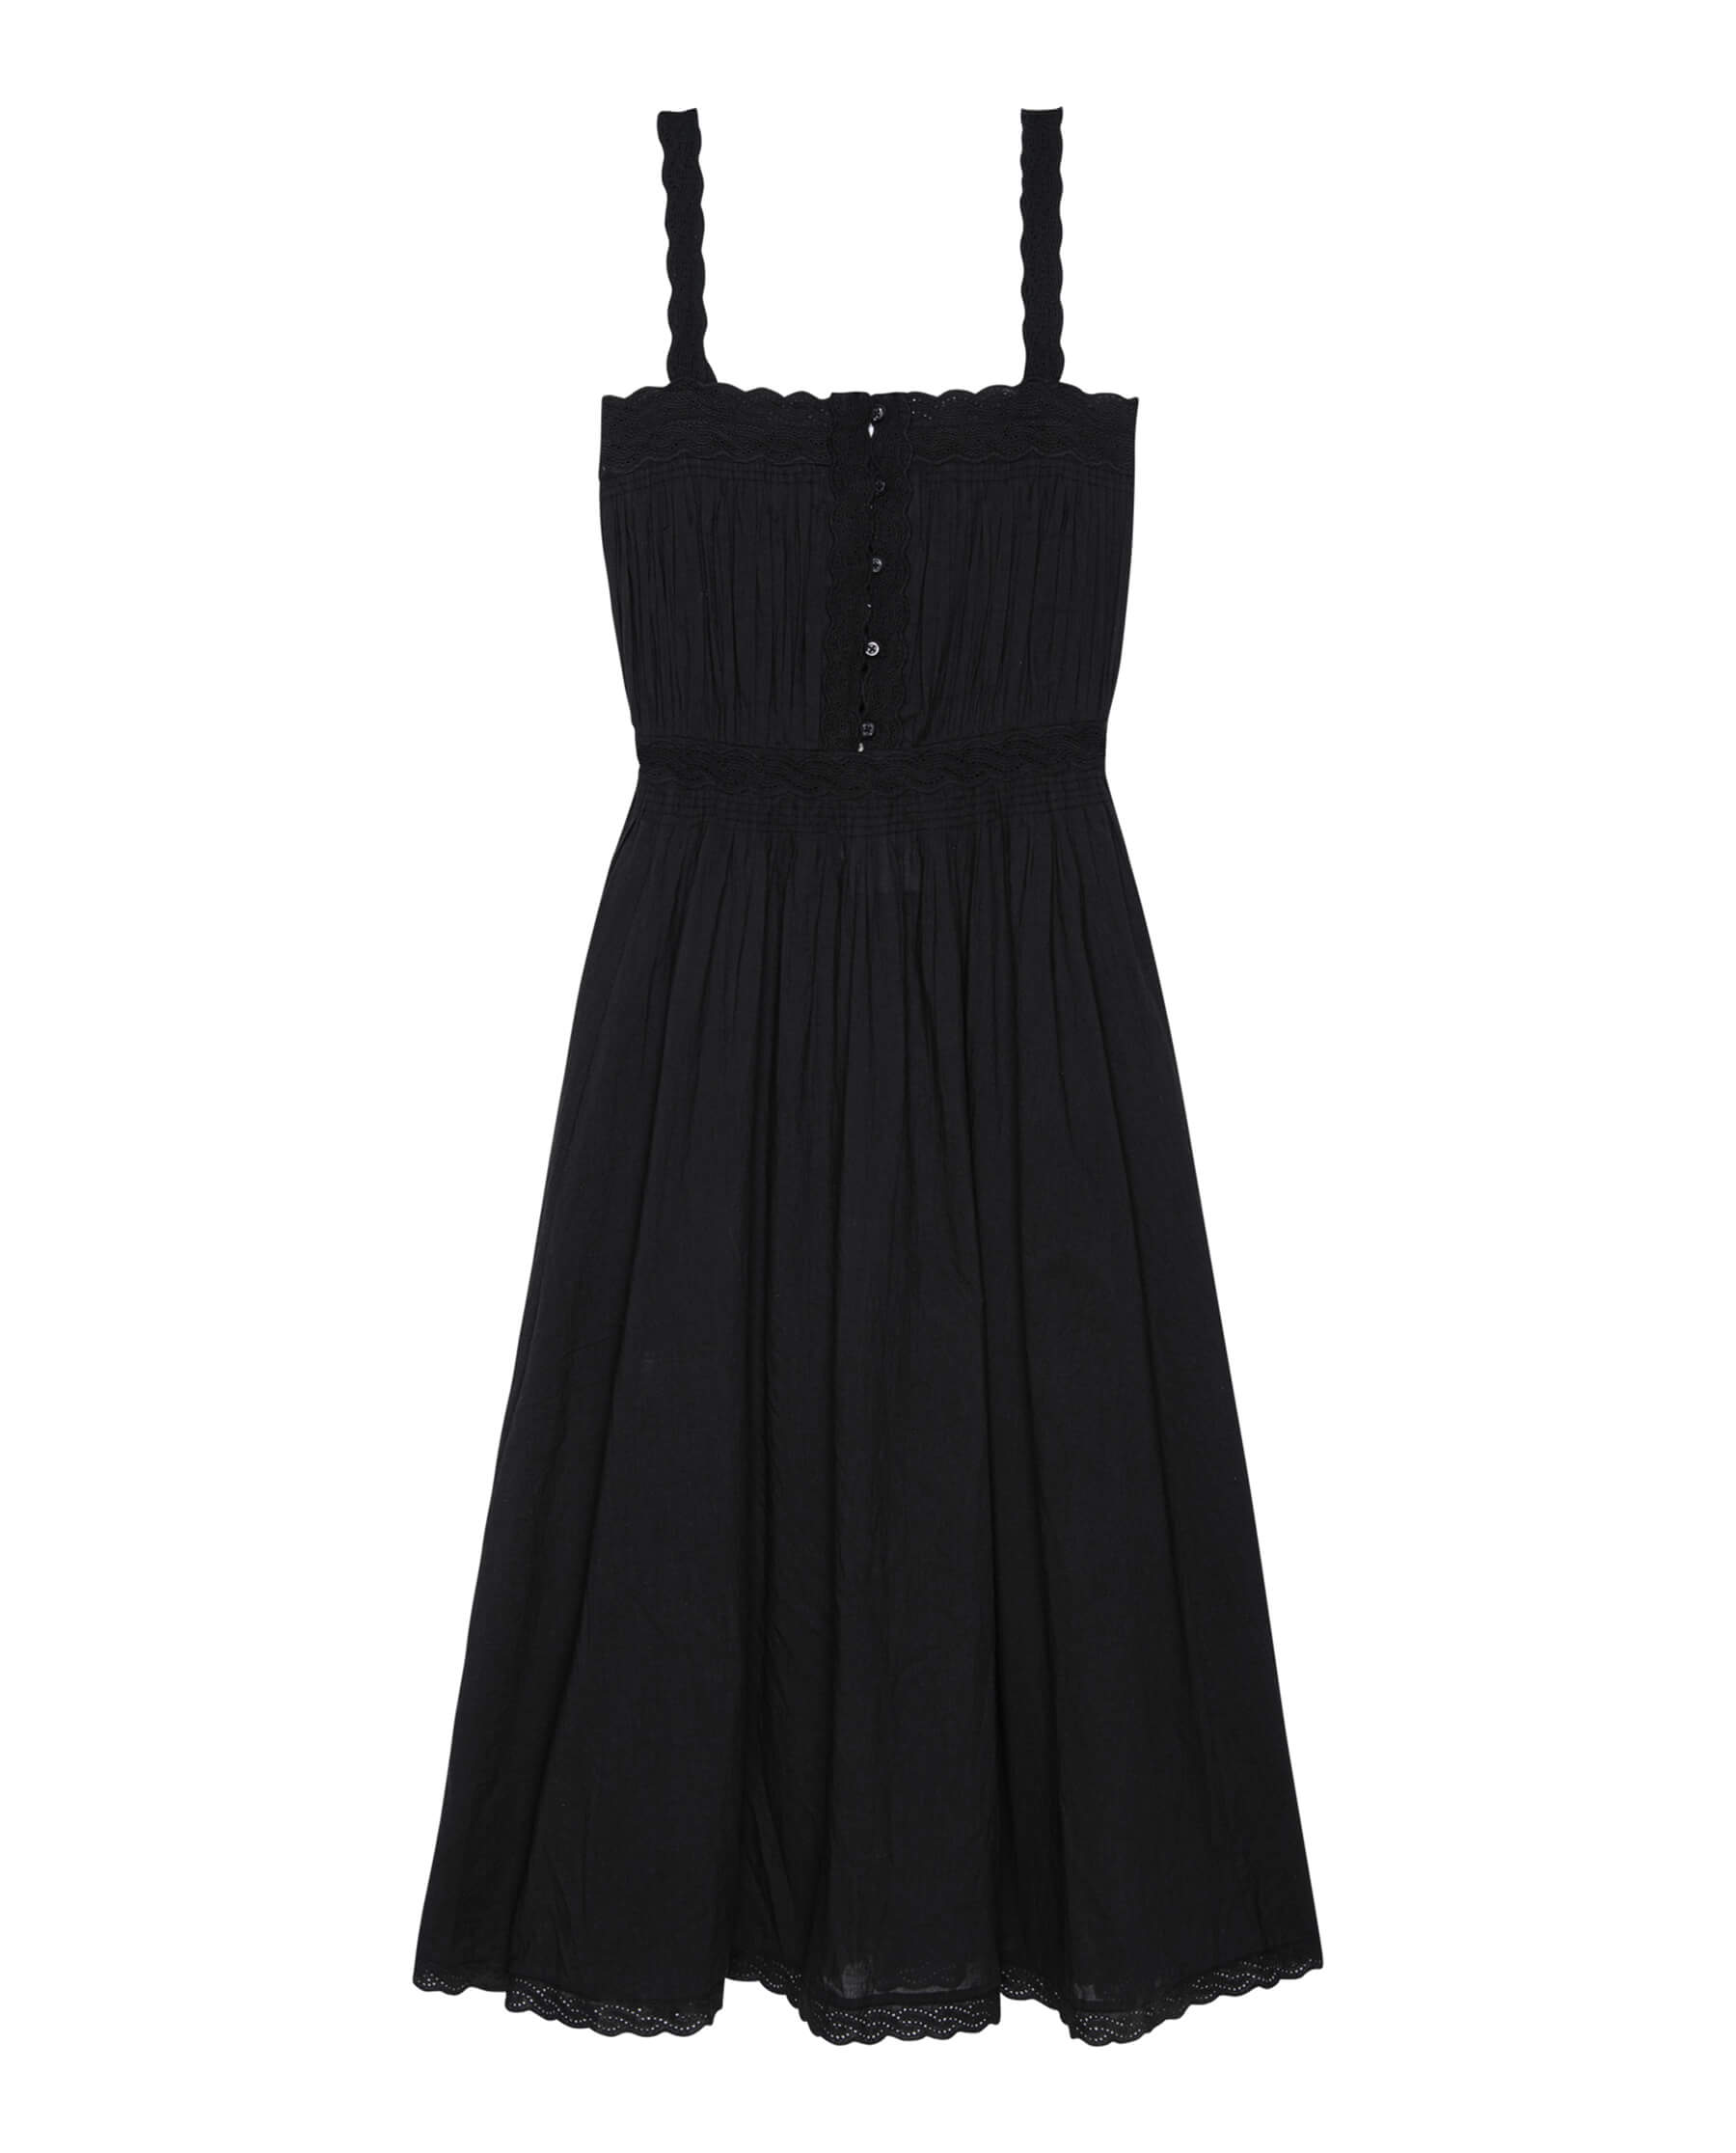 The Cachet Dress. -- Black